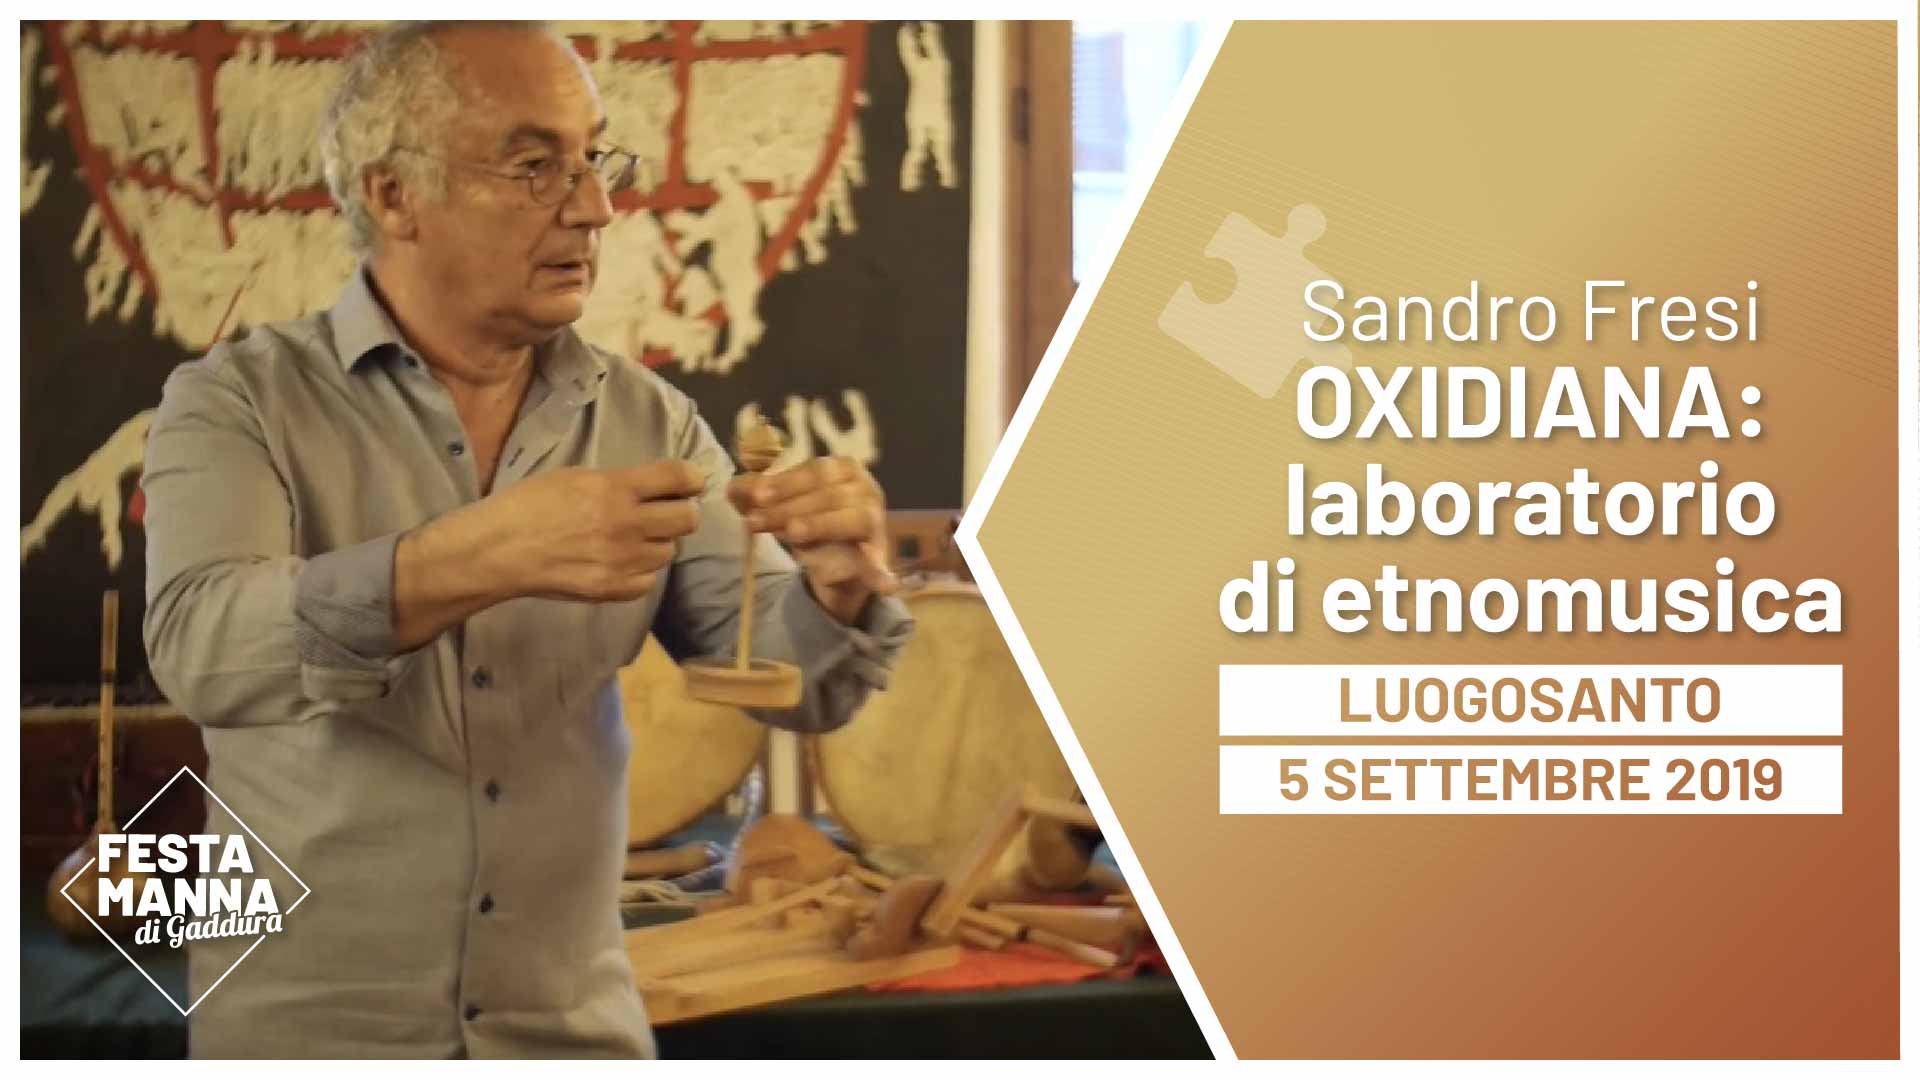 Oxidiana, atelier ethnomusique avec Sandro Fresi | Festa Manna di Gaddura 2019